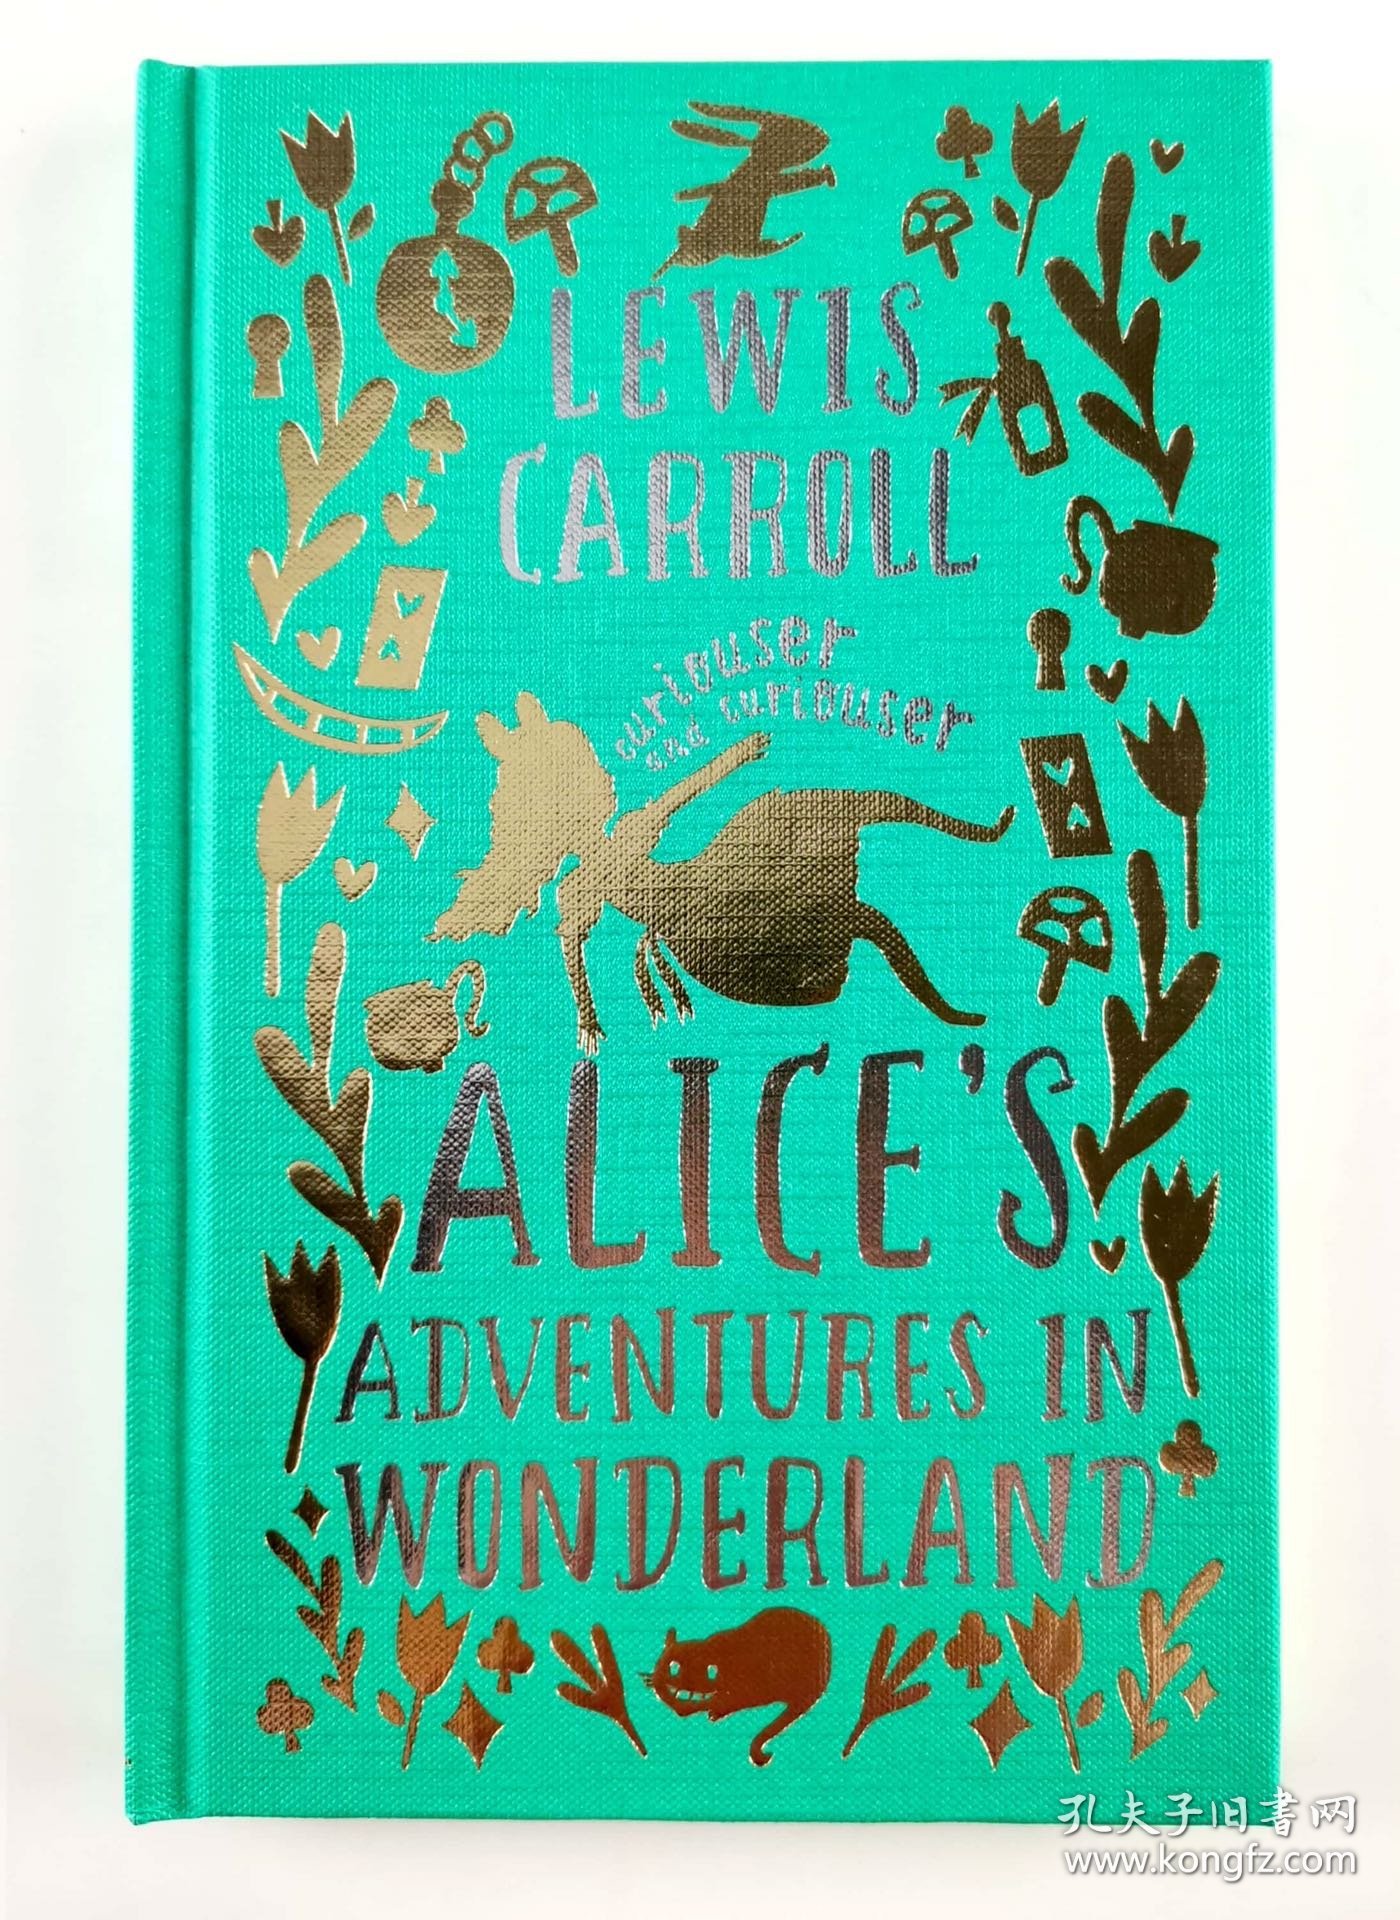 Alice's Adventures in Wonderland (Deluxe Hardbound Edition)